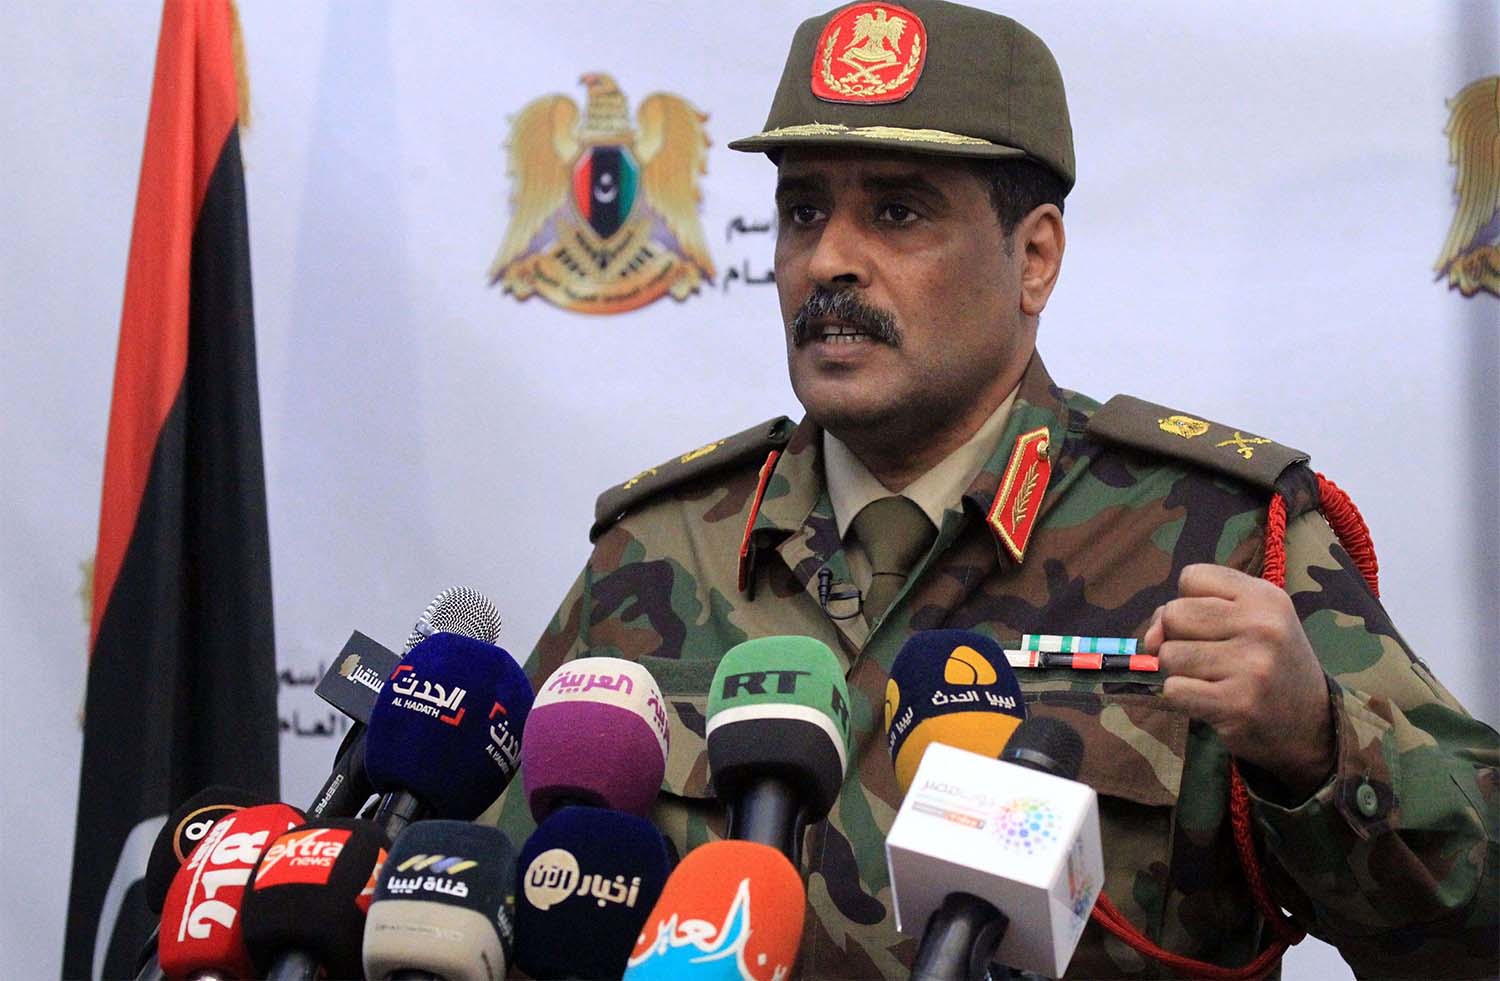 LNA spokesman, General Ahmed al-Mesmari